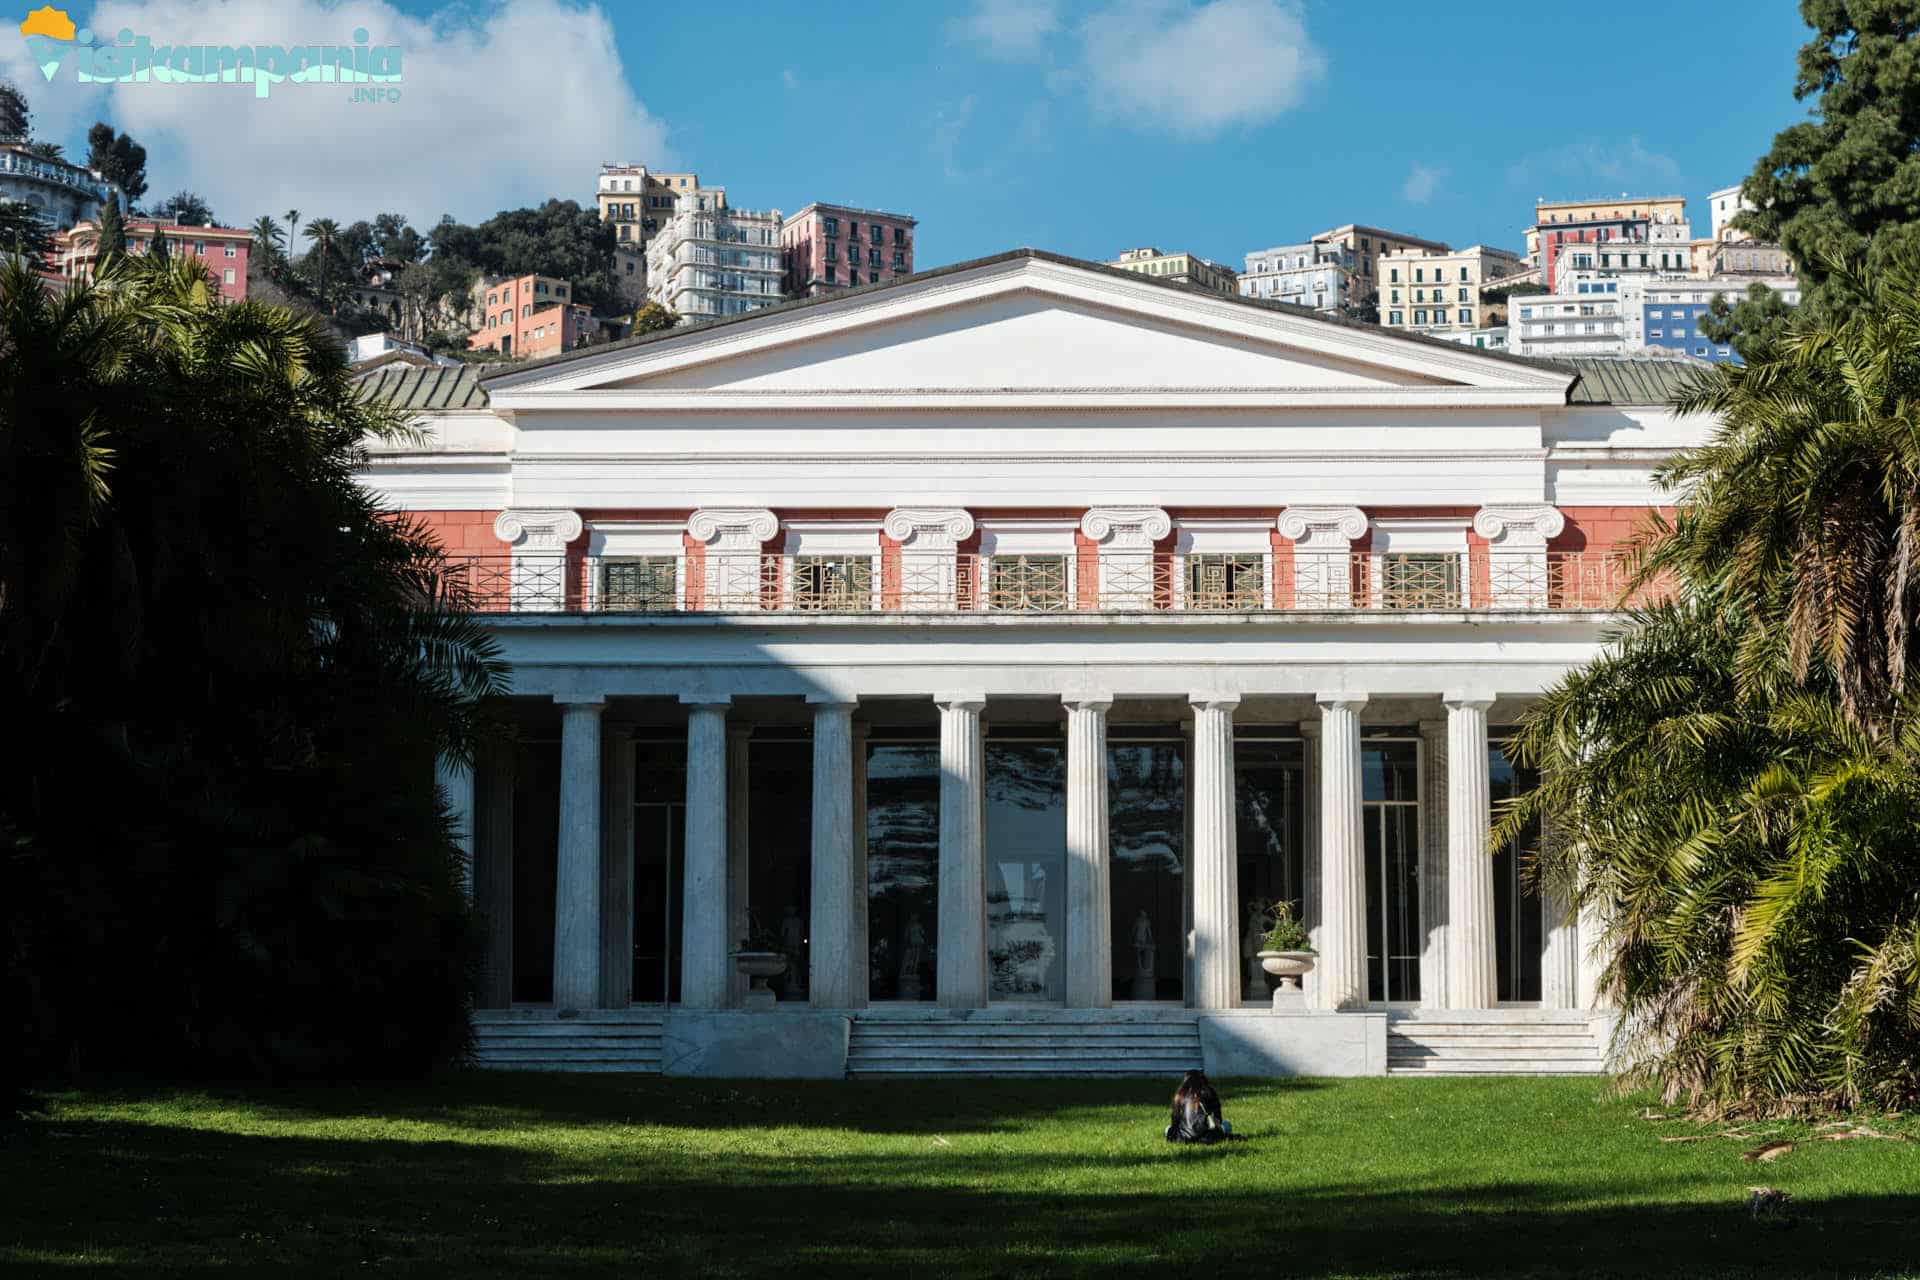 Villa Pignatelli, the neoclassical façade